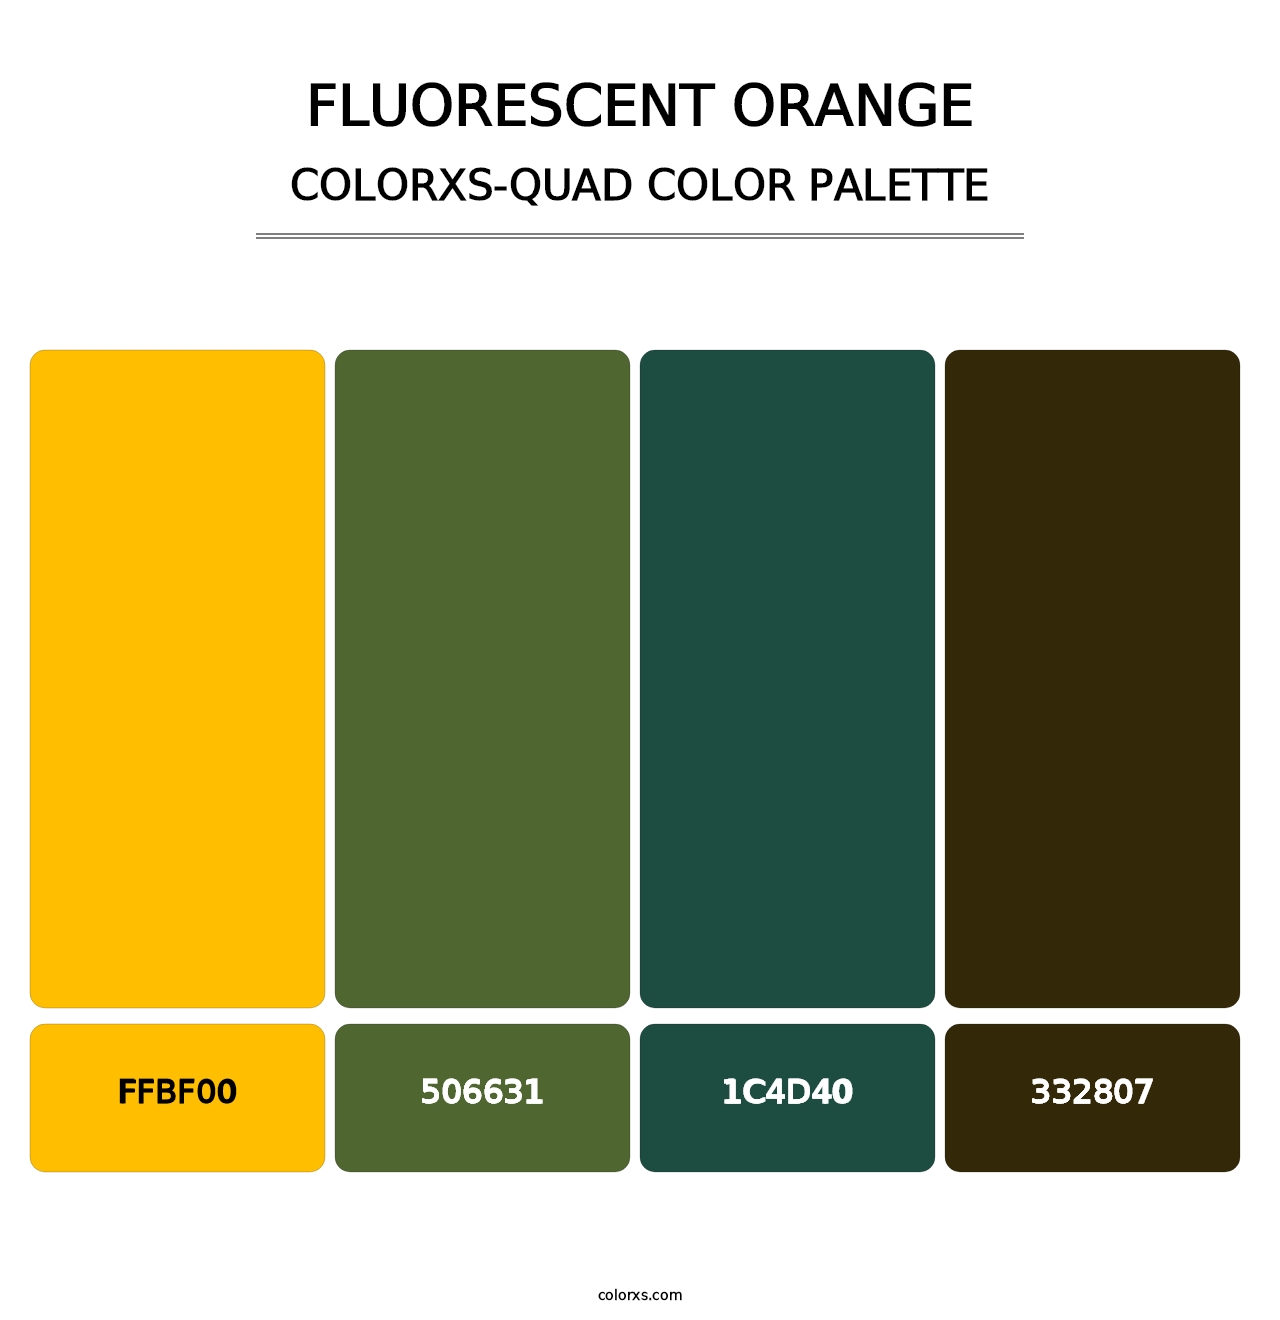 Fluorescent Orange - Colorxs Quad Palette